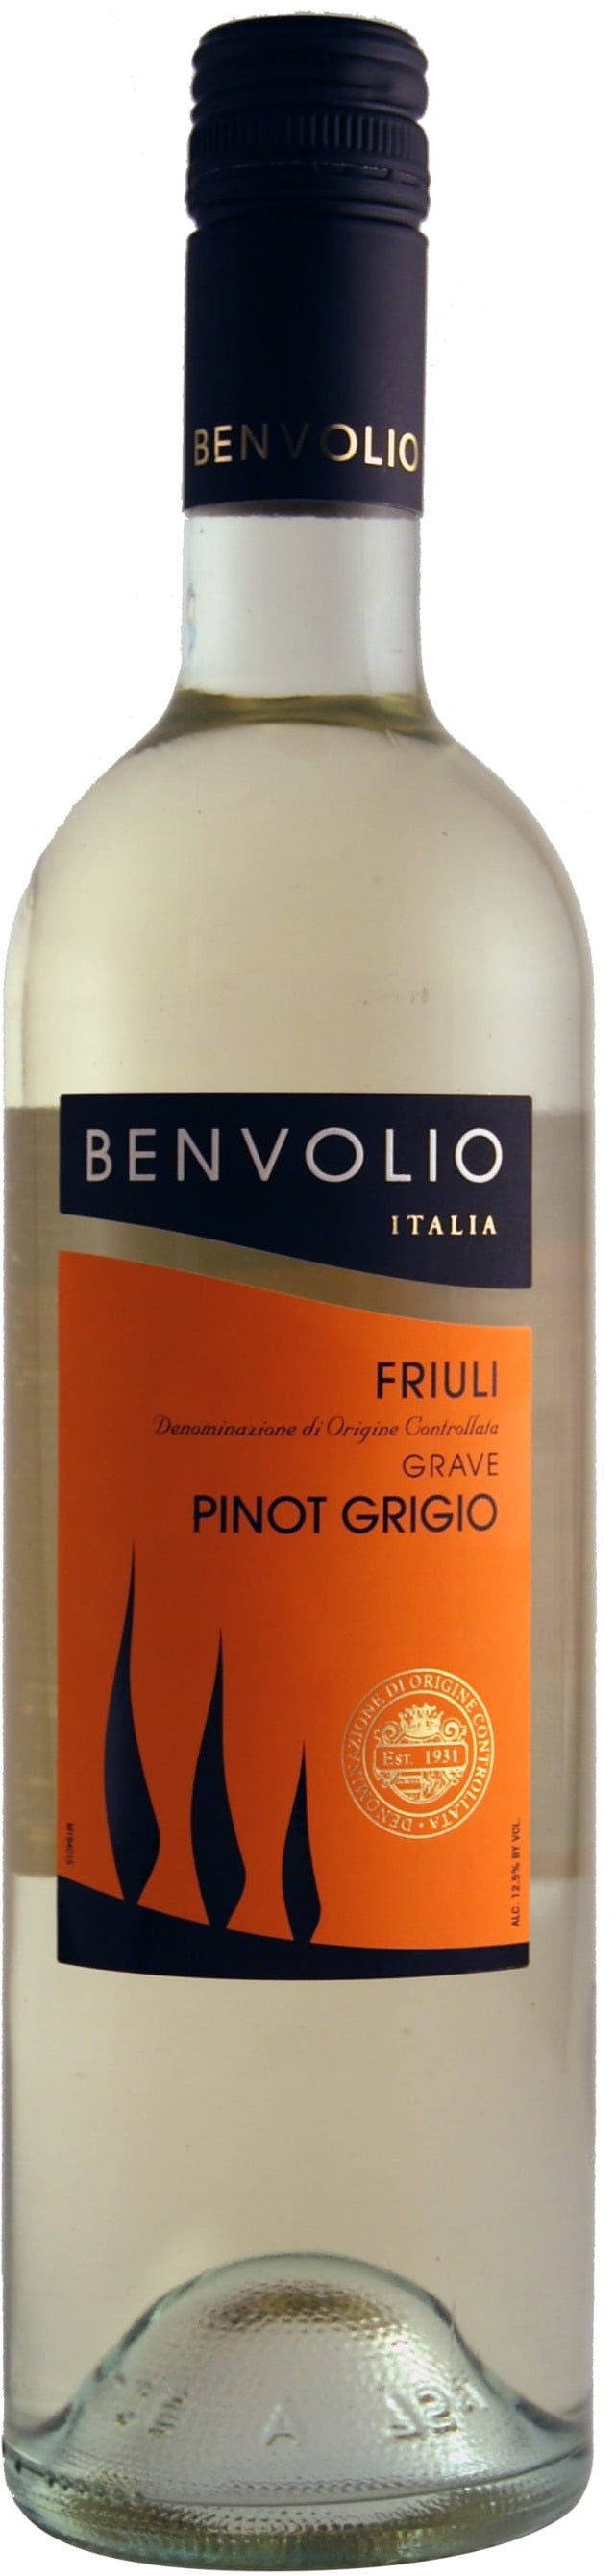 Benvolio Pinot Grigio 2019